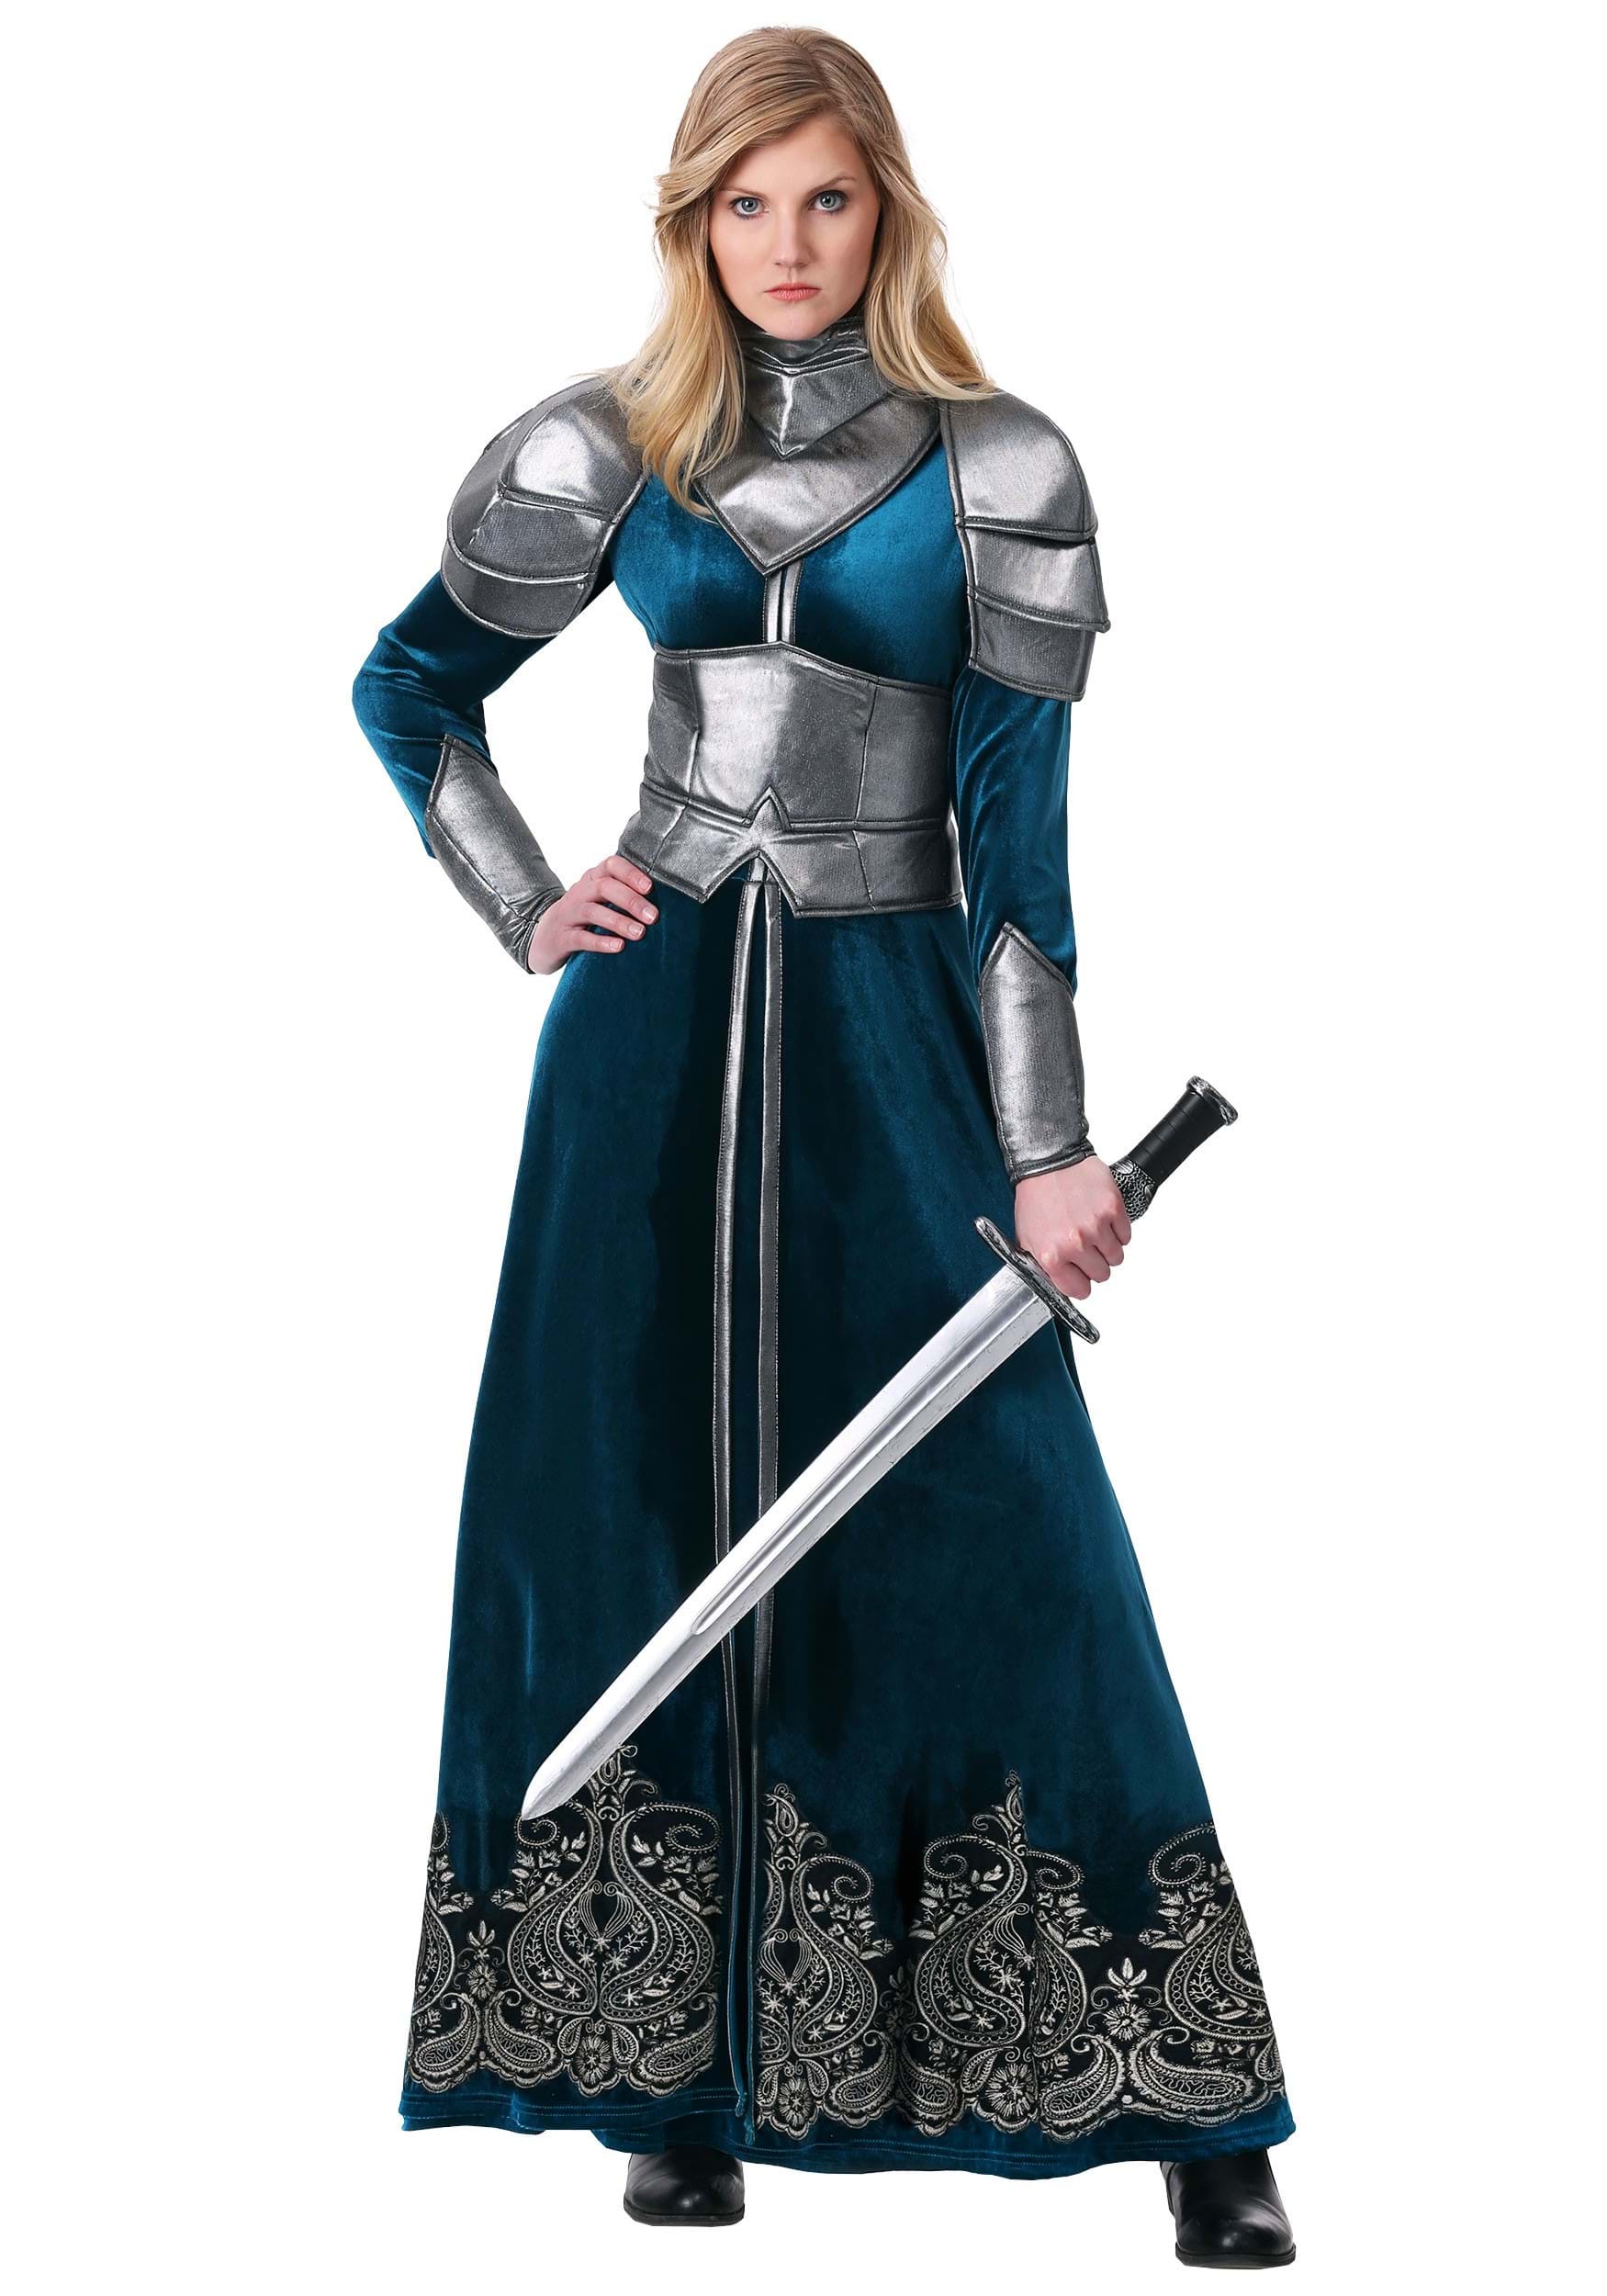 Women's Medieval Warrior Costume 